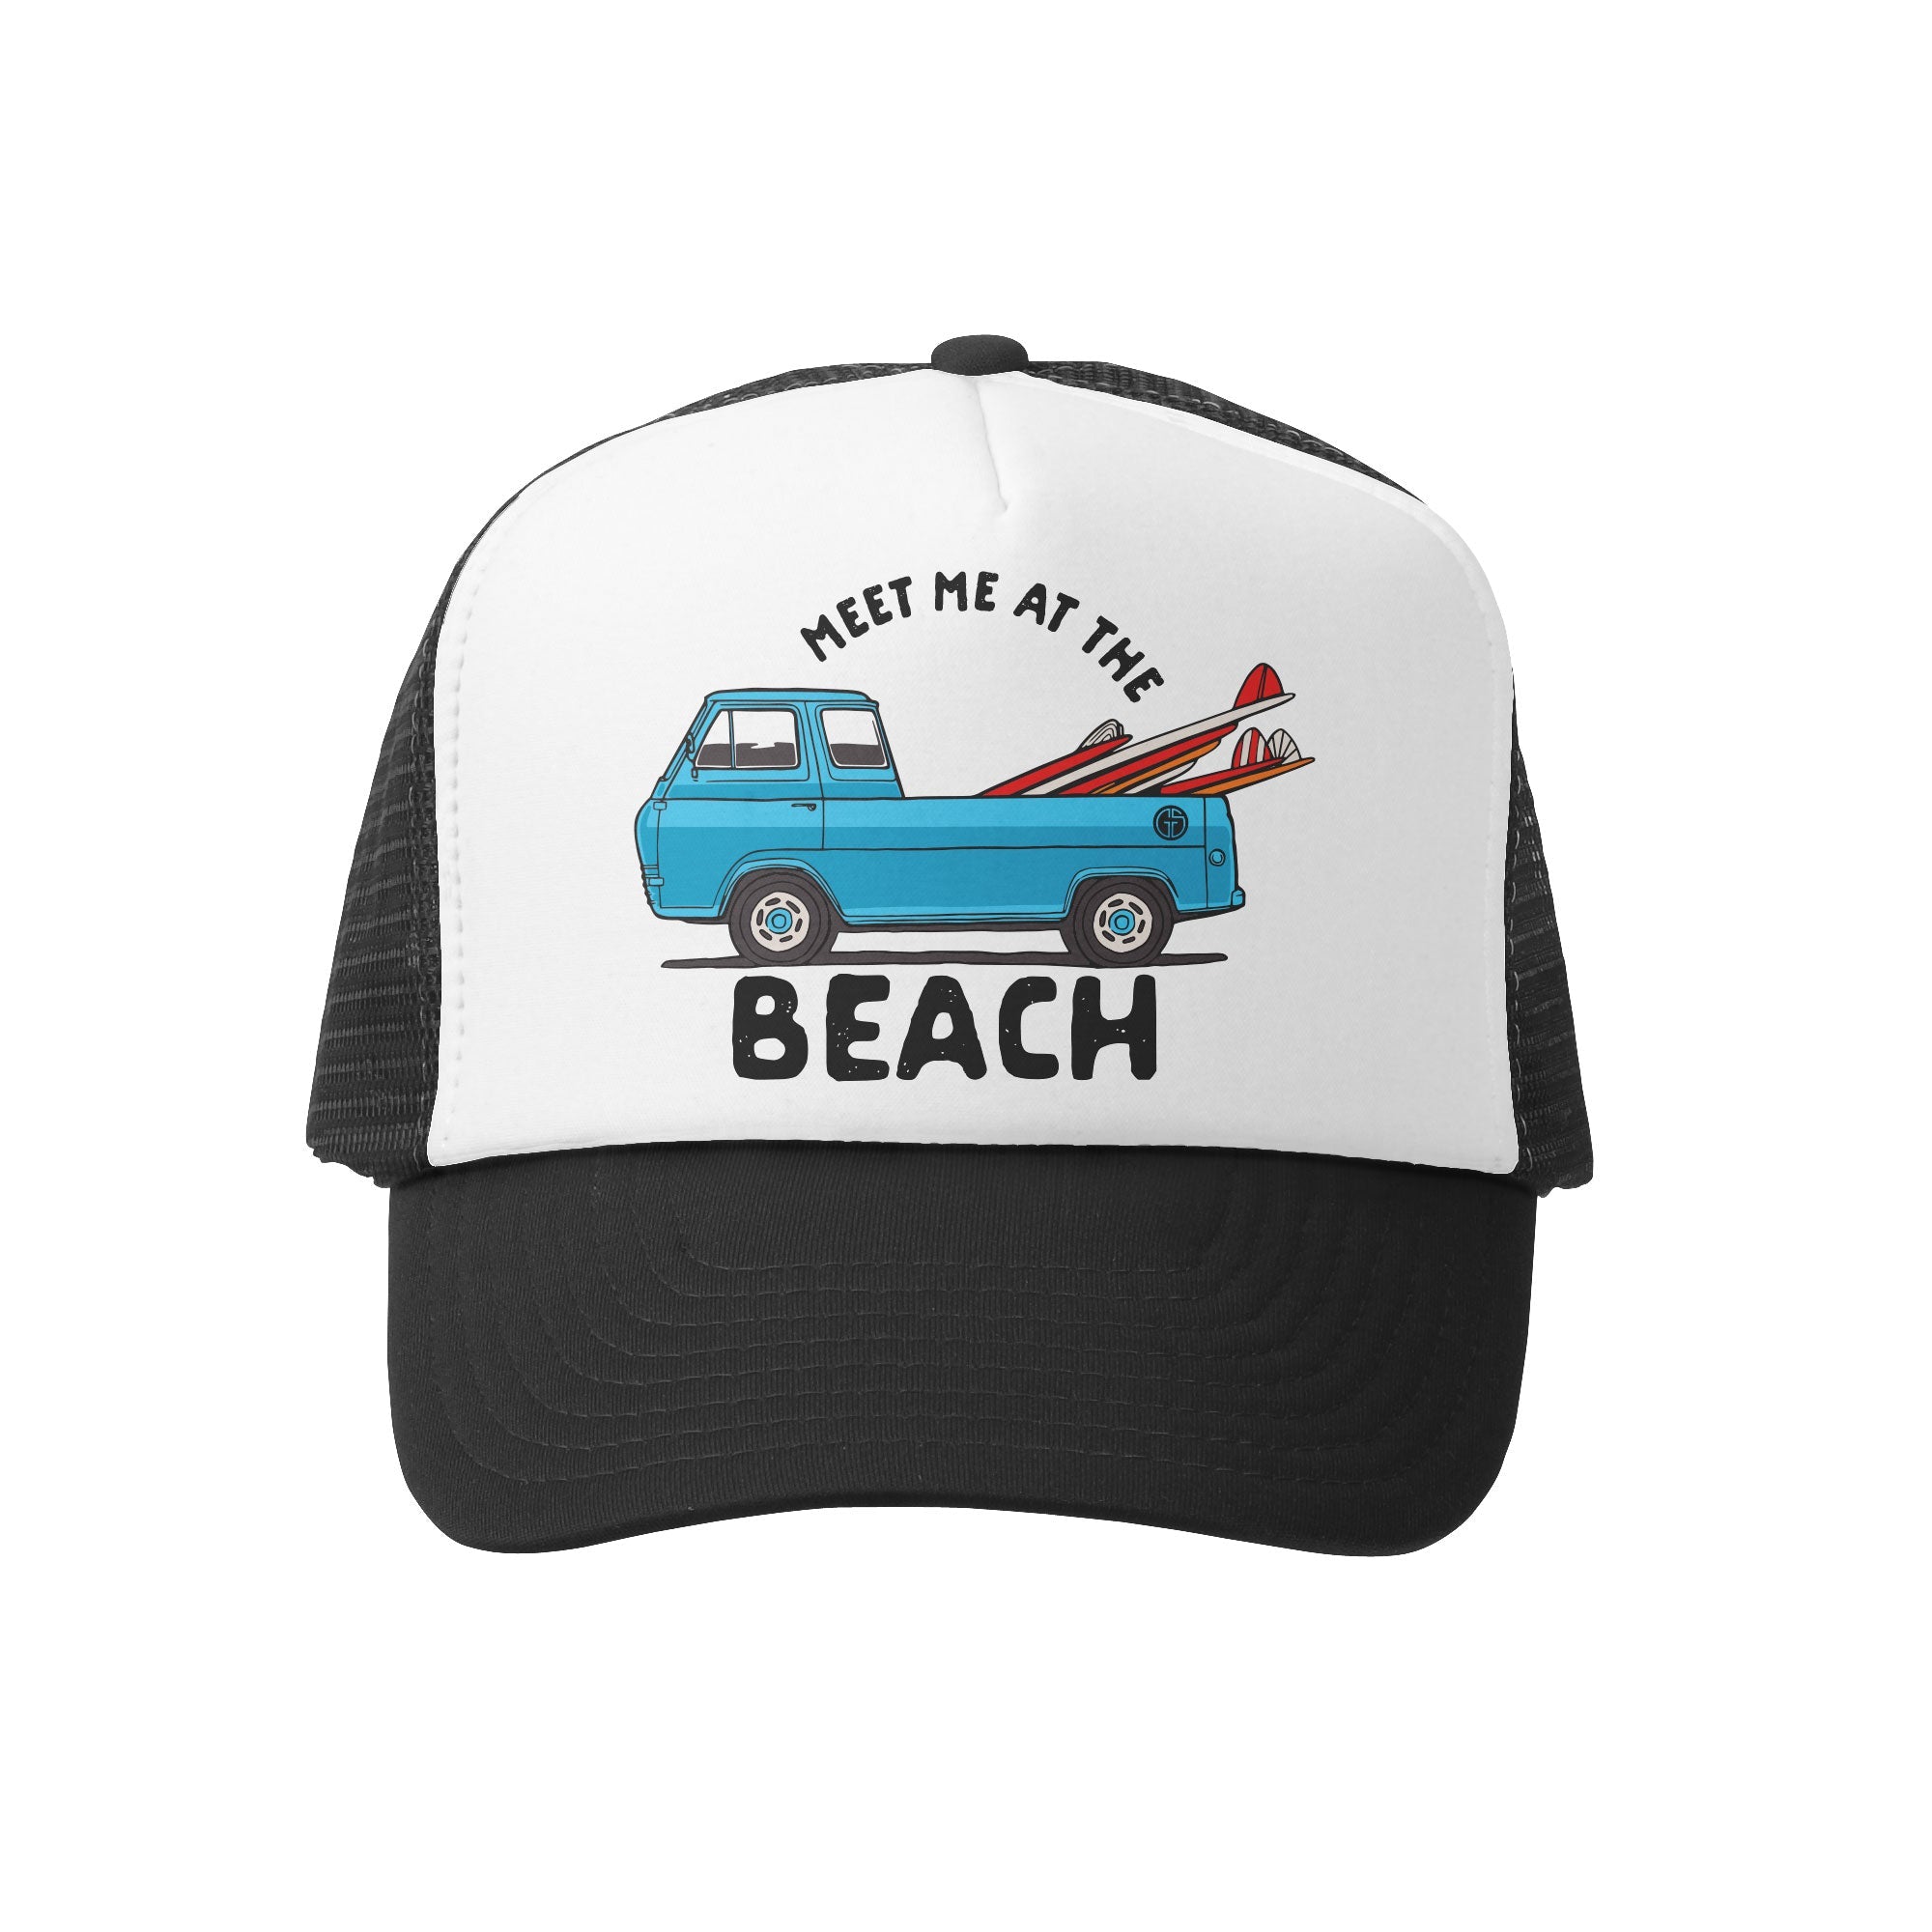 Grom Squad Meet Me At The Beach Trucker Hat Black/White Big